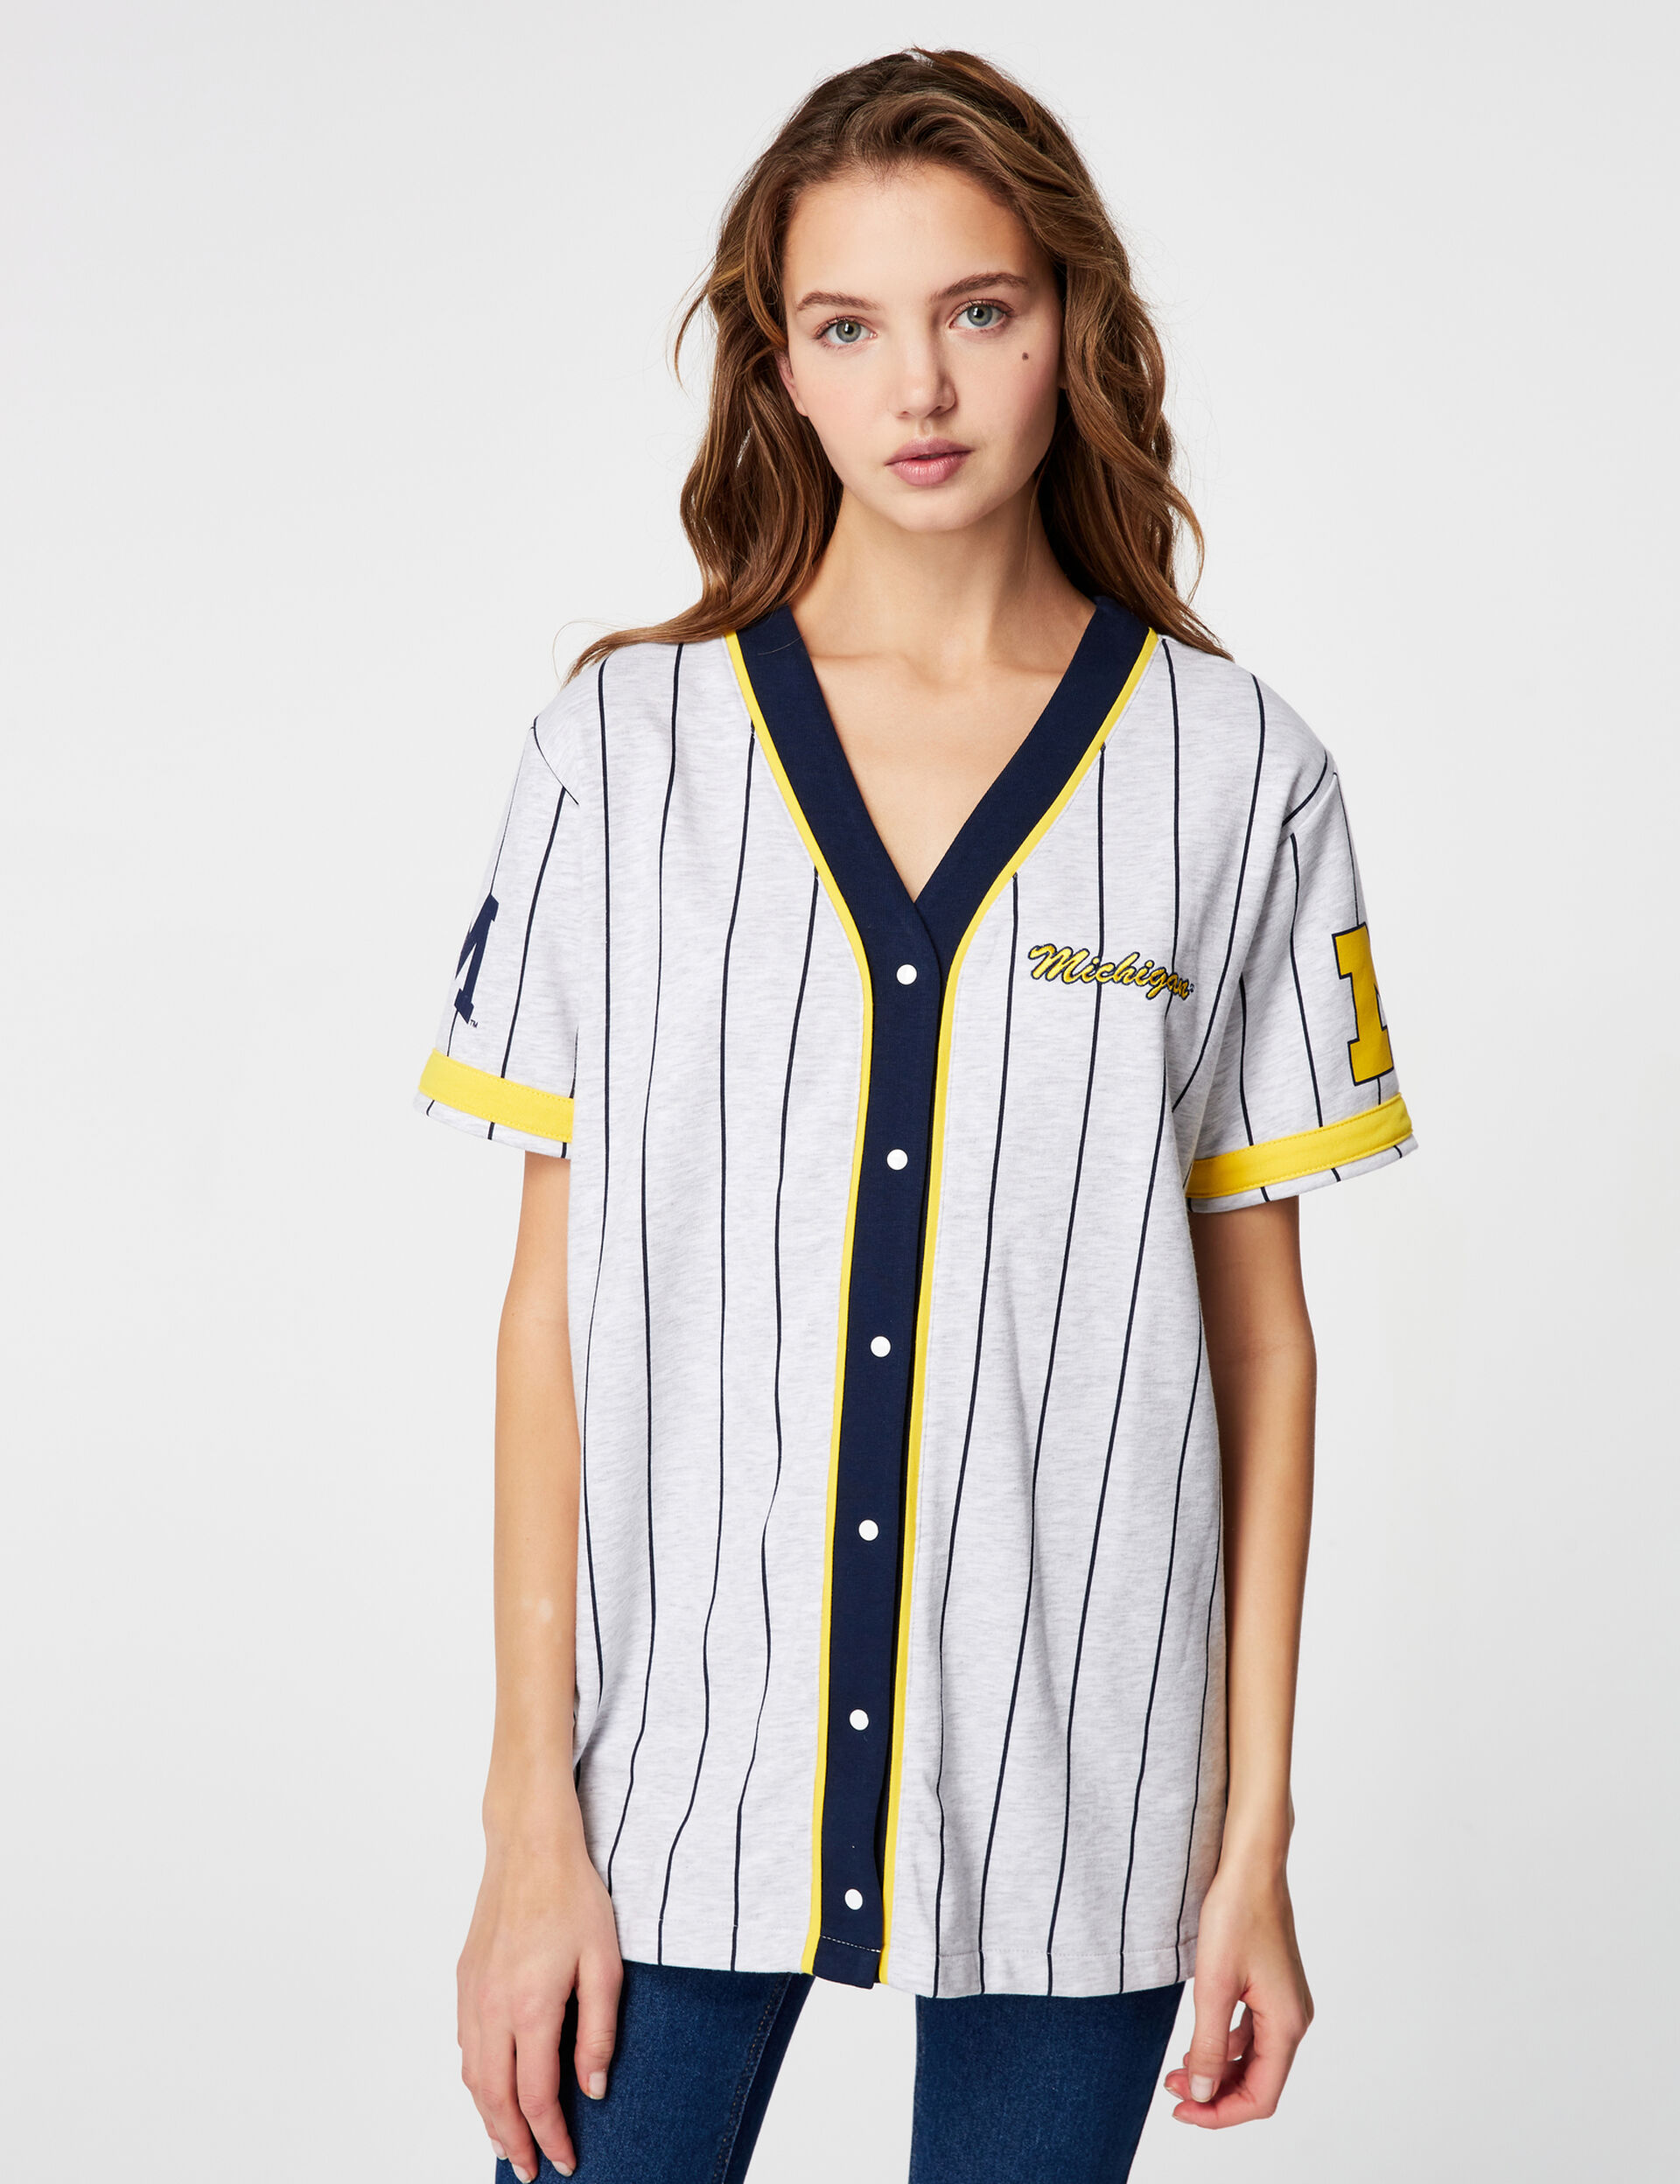 Michigan baseball T-shirt